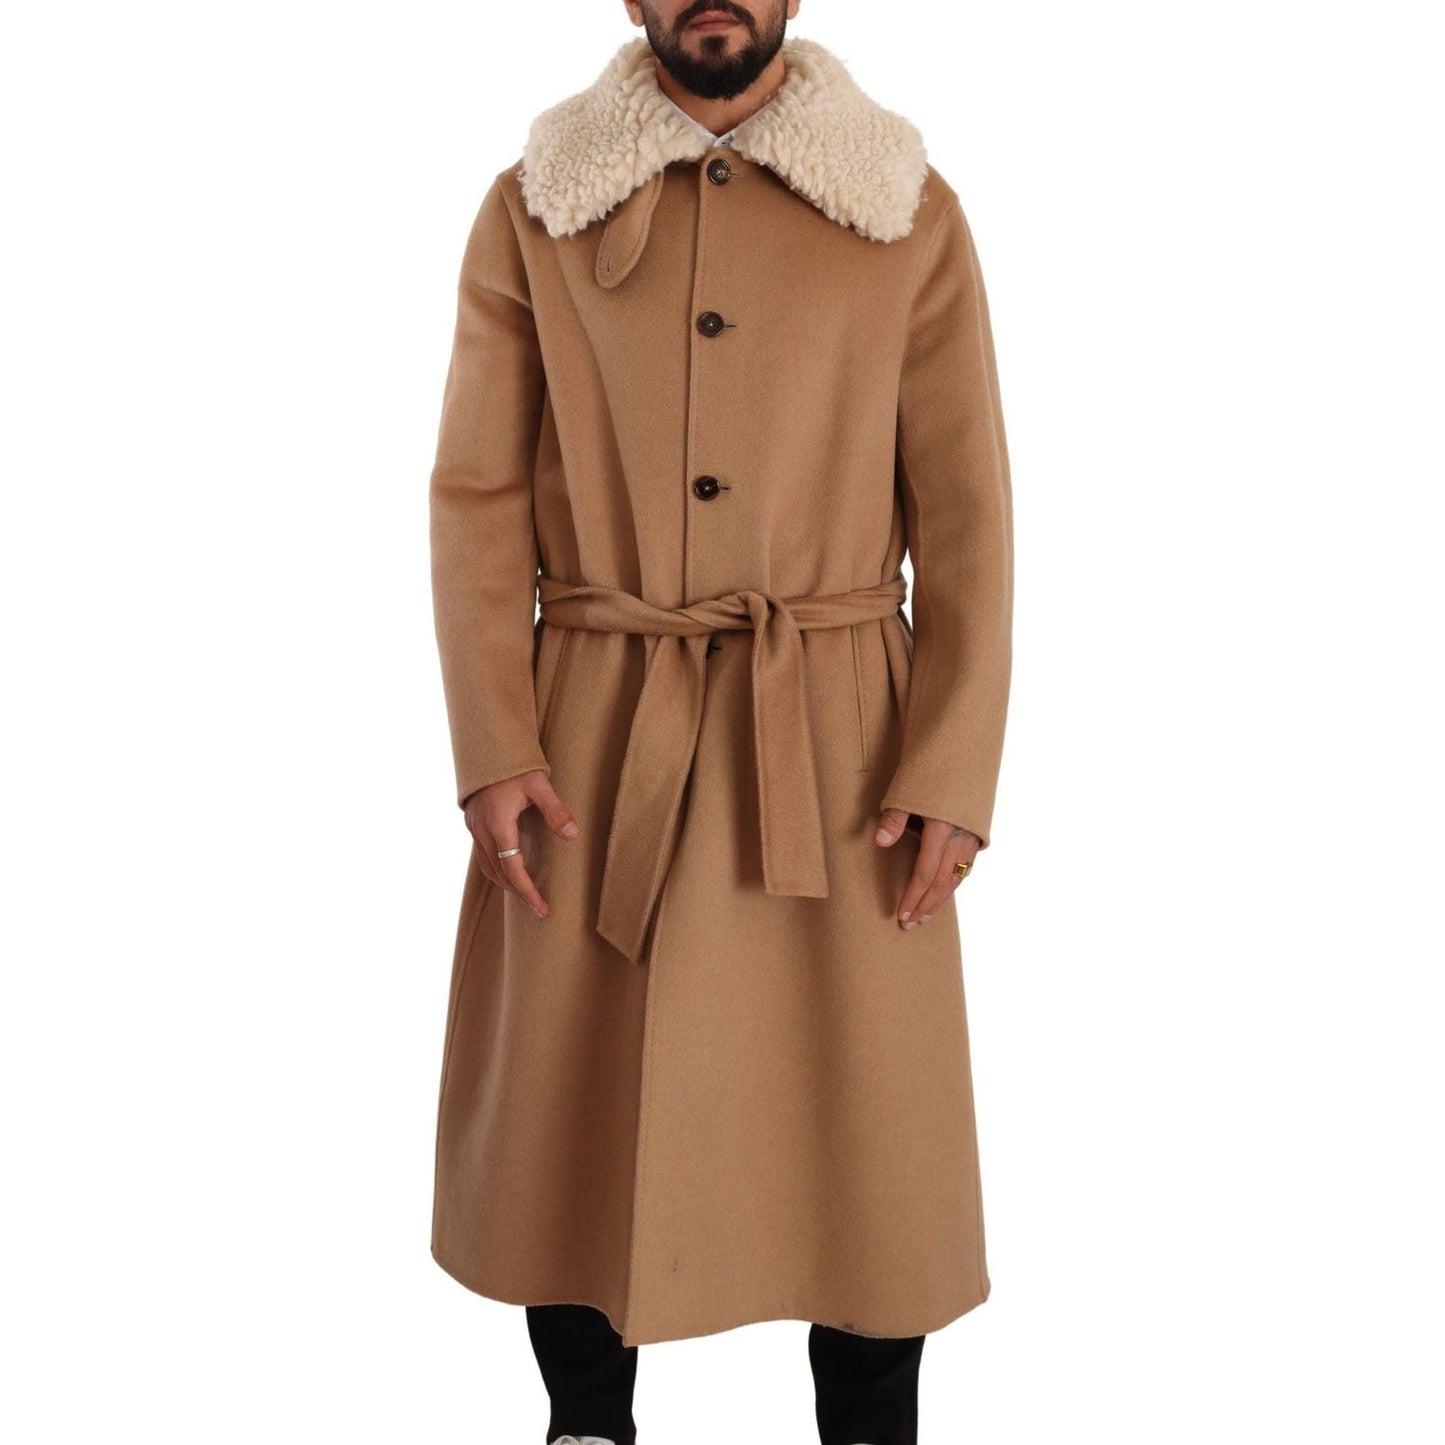 Dolce & Gabbana Opulent Beige Shearling-Collar Overcoat beige-camel-skin-cashmere-shearling-overcoat-jacket IMG_5025-scaled-fba8fcb5-fe1.jpg